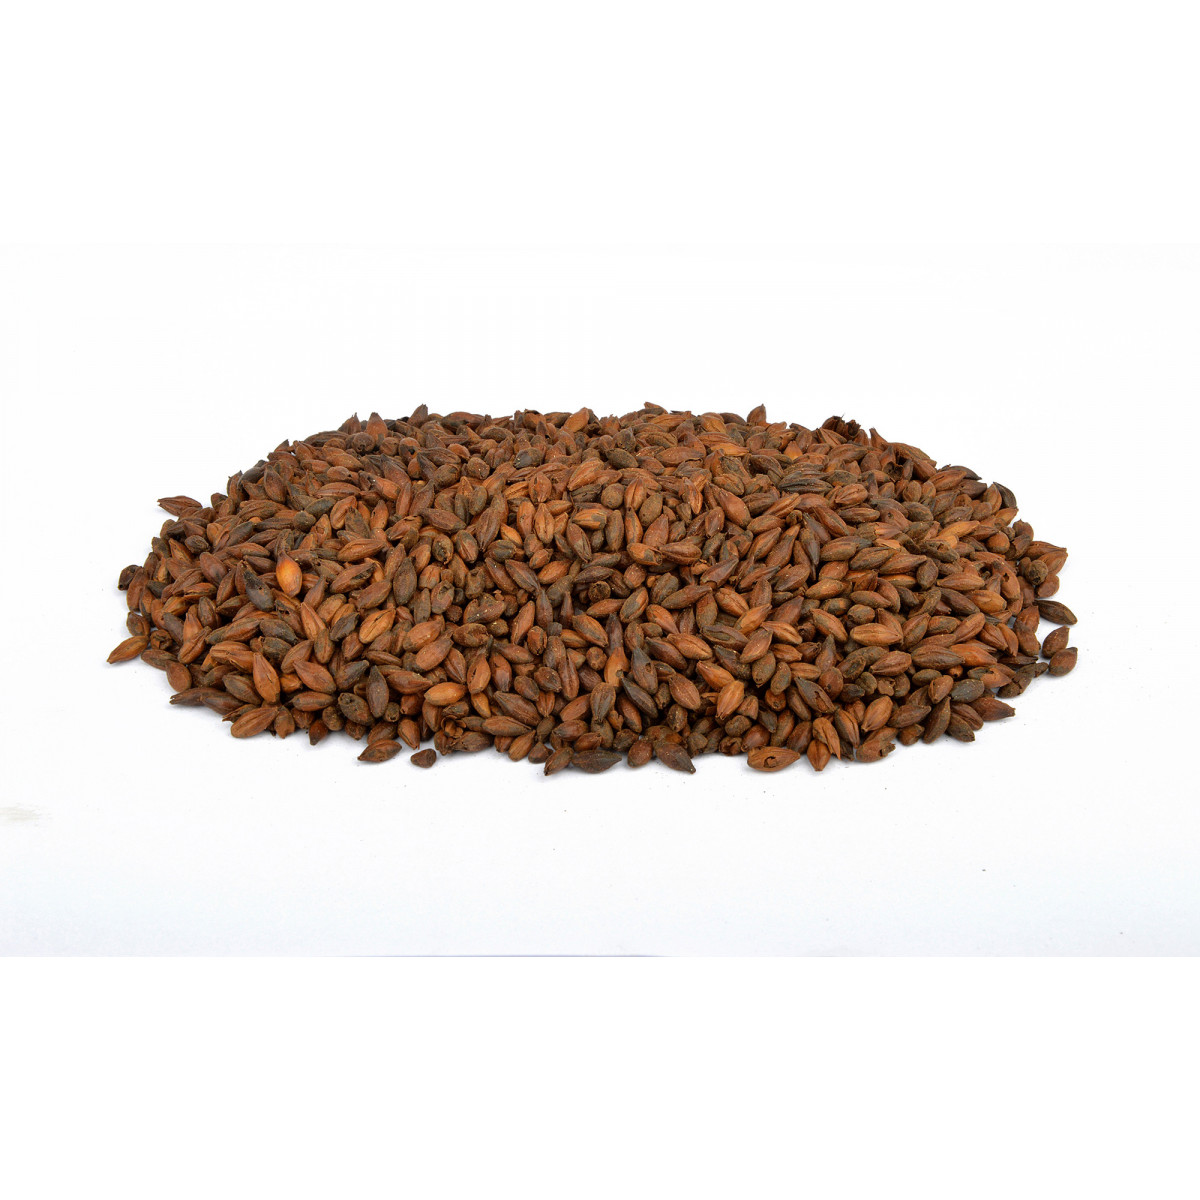 Weyermann® malt de froment chocolat 900-1200 EBC 25 kg